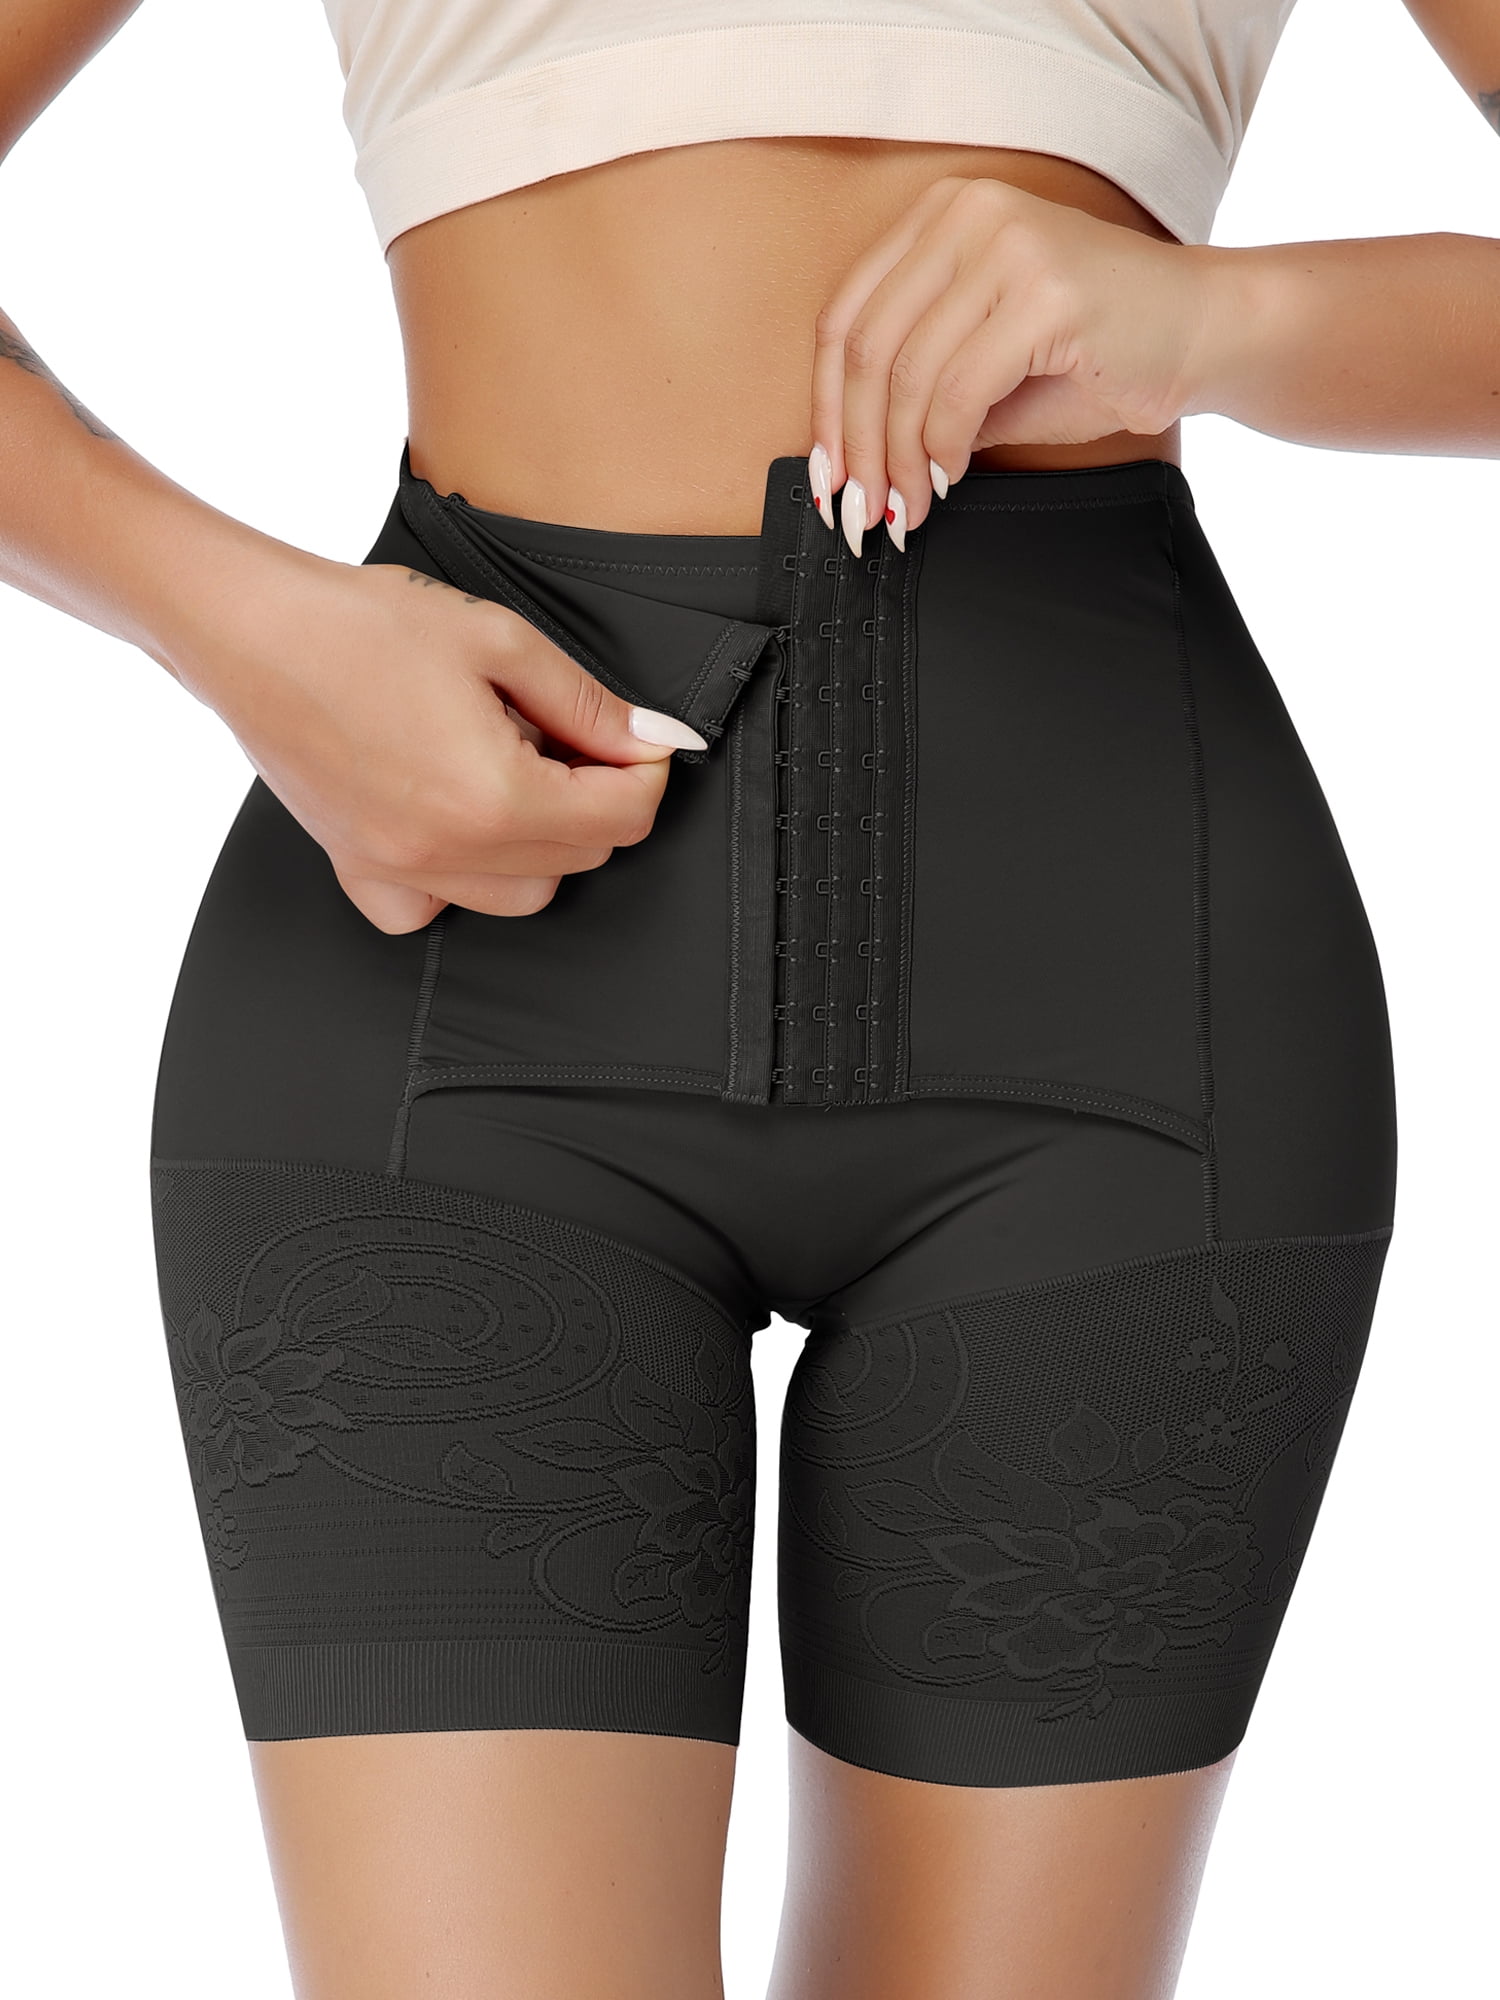 Tummy Control Shapewear Body Shaper 2Pcs The Dreamy Curve Hi-Waist Panty Butt Lifter for Women